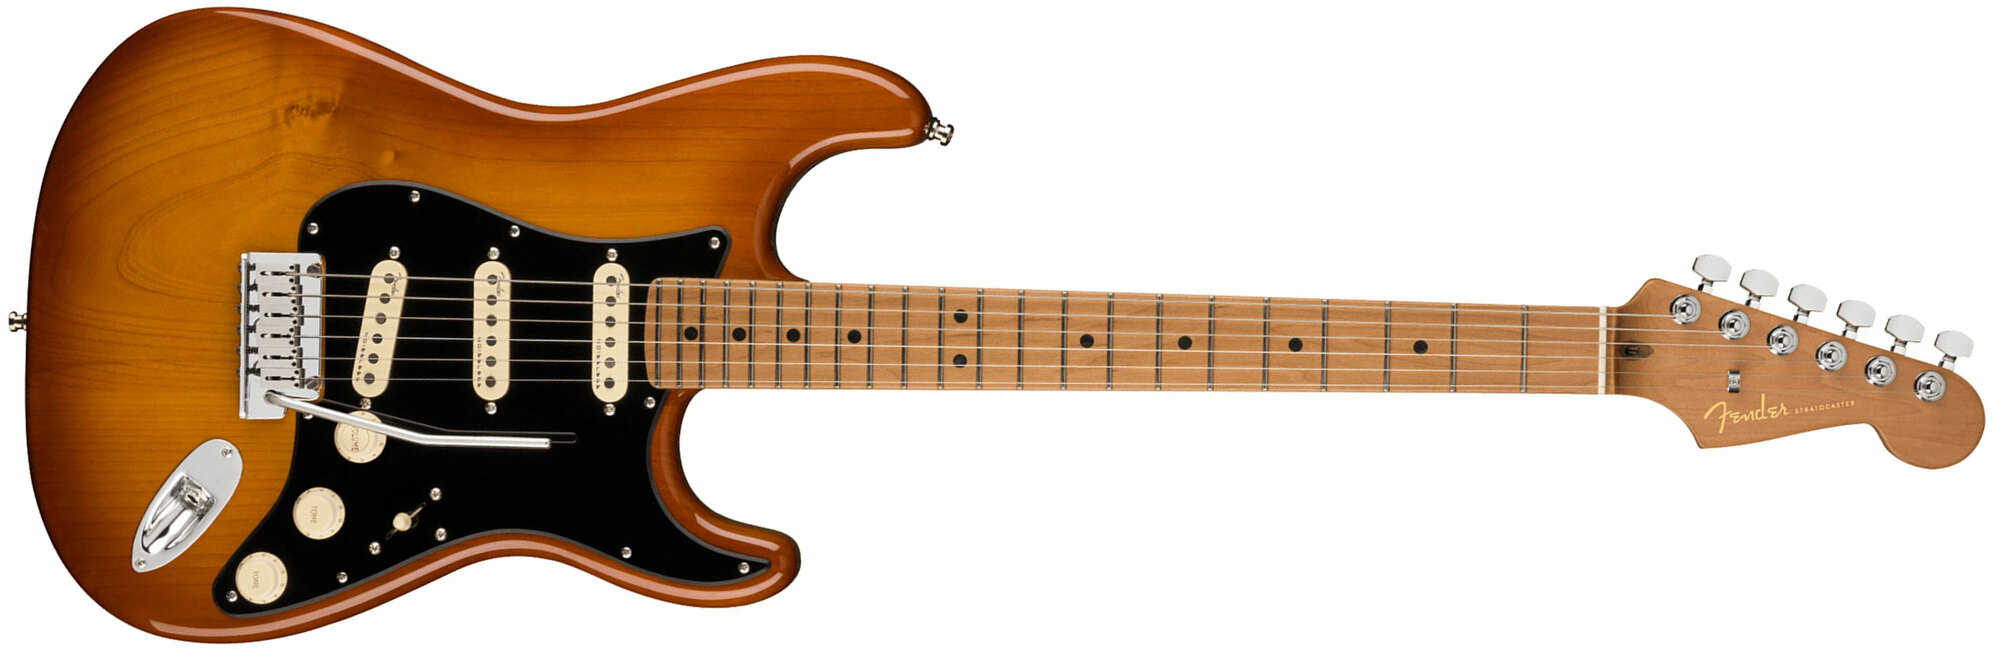 Fender Strat American Ultra Roasted Fretboard Ltd Usa 3s Trem Mn - Honey Burst - E-Gitarre in Str-Form - Main picture